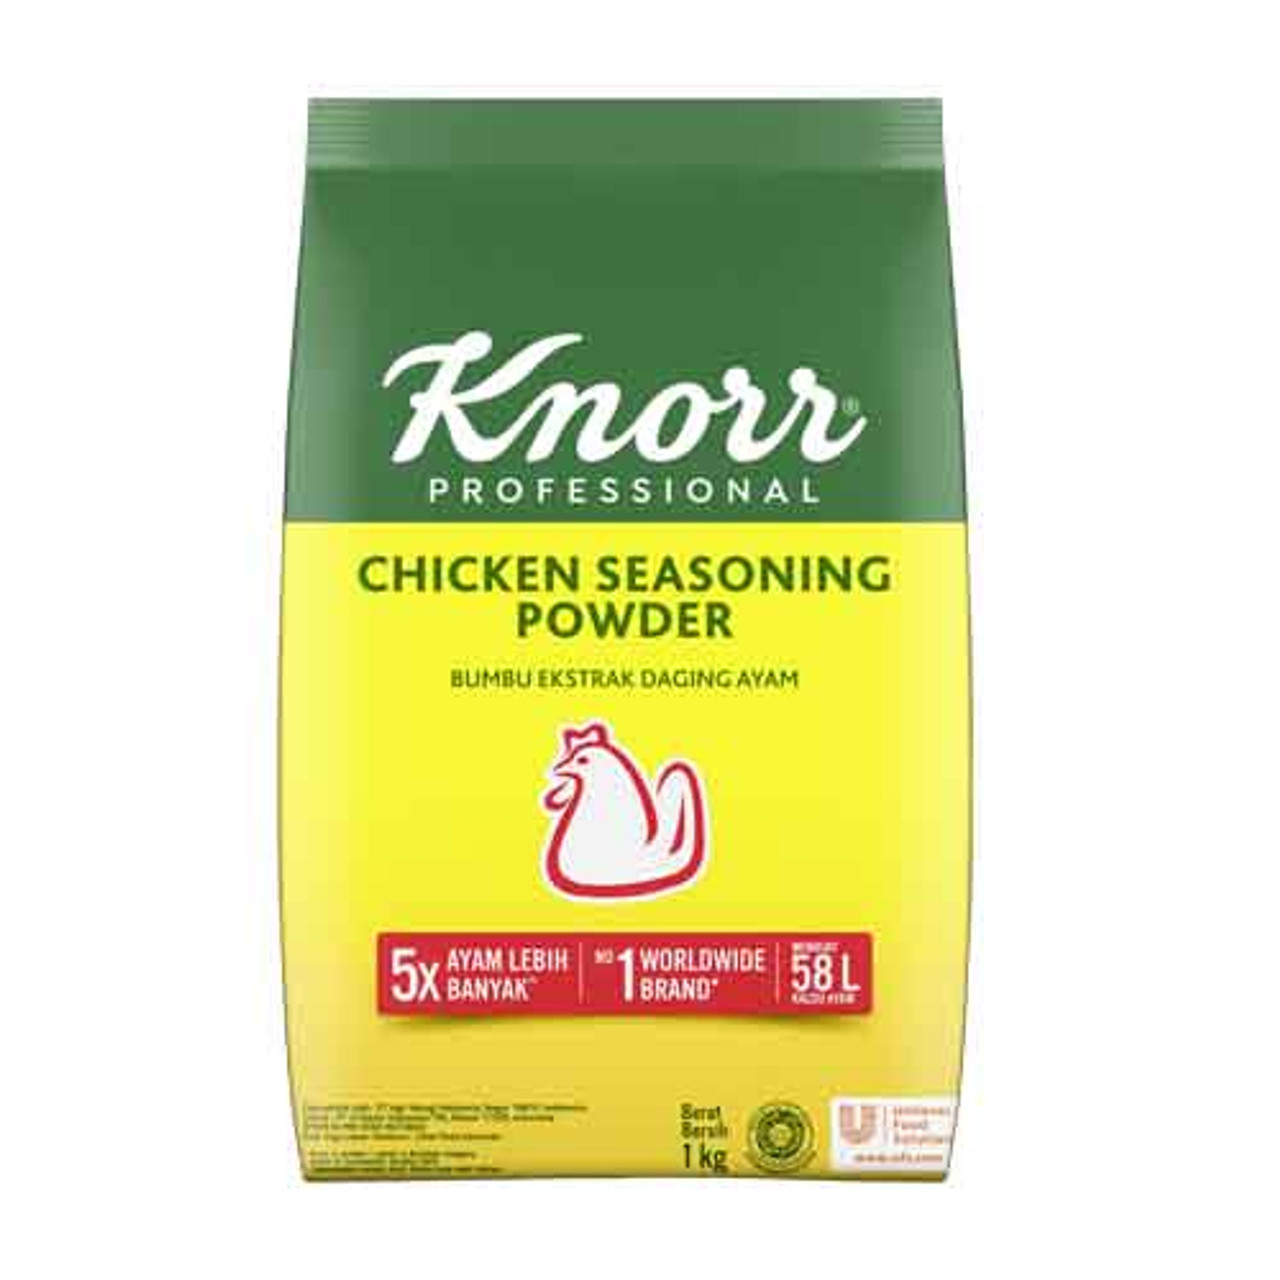 Knorr Chicken Seasoning Powder 1 Kg